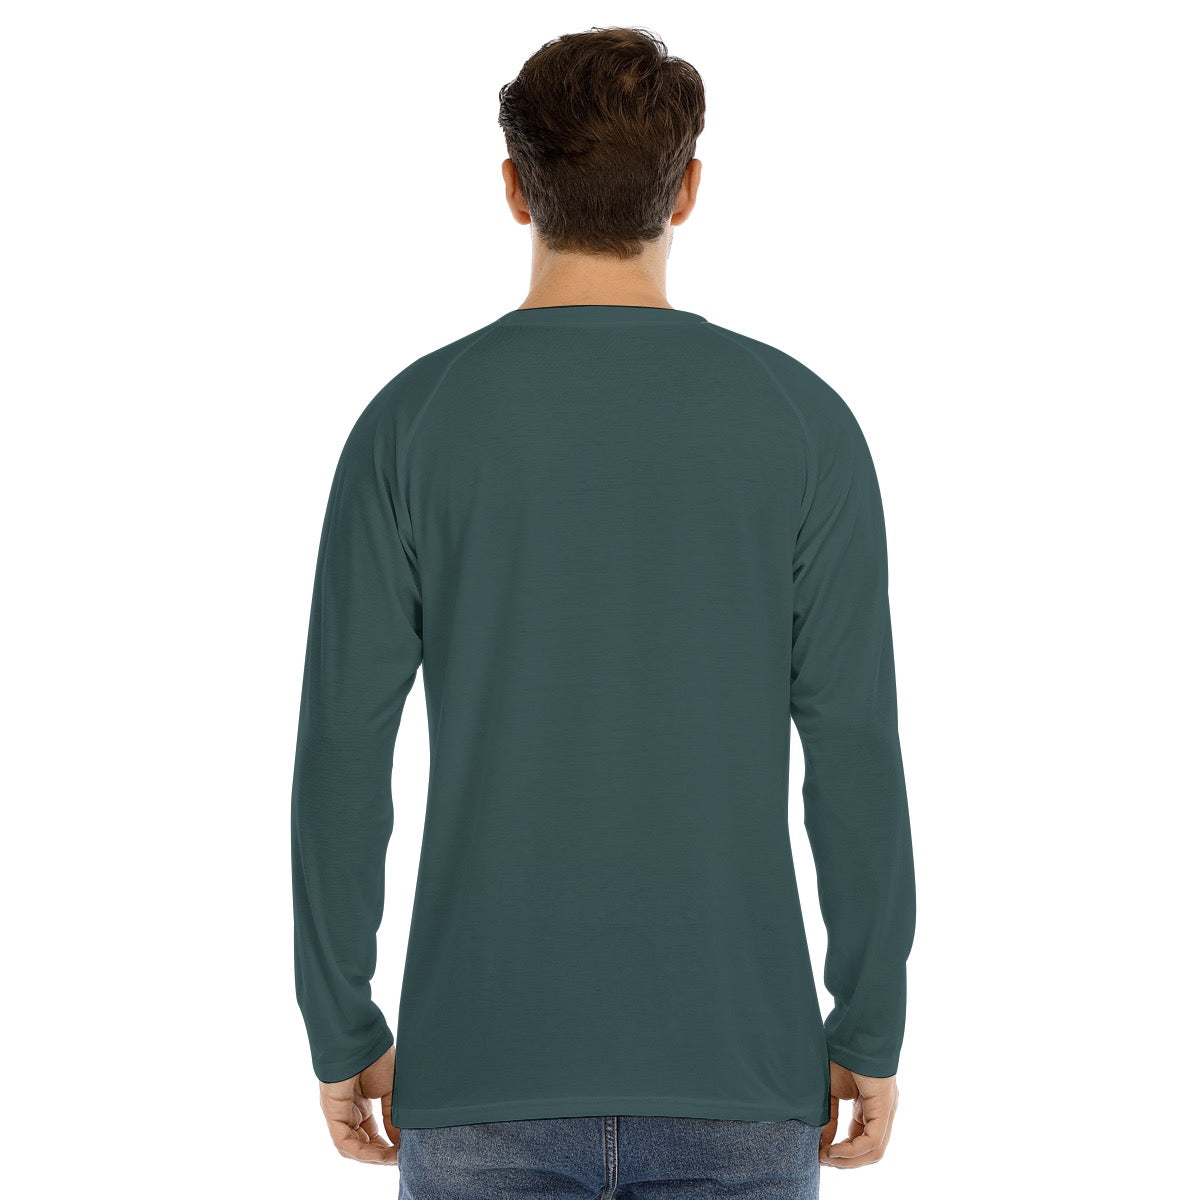 Paisley 106 -- Men's Long Sleeve T-shirt With Raglan Sleeve